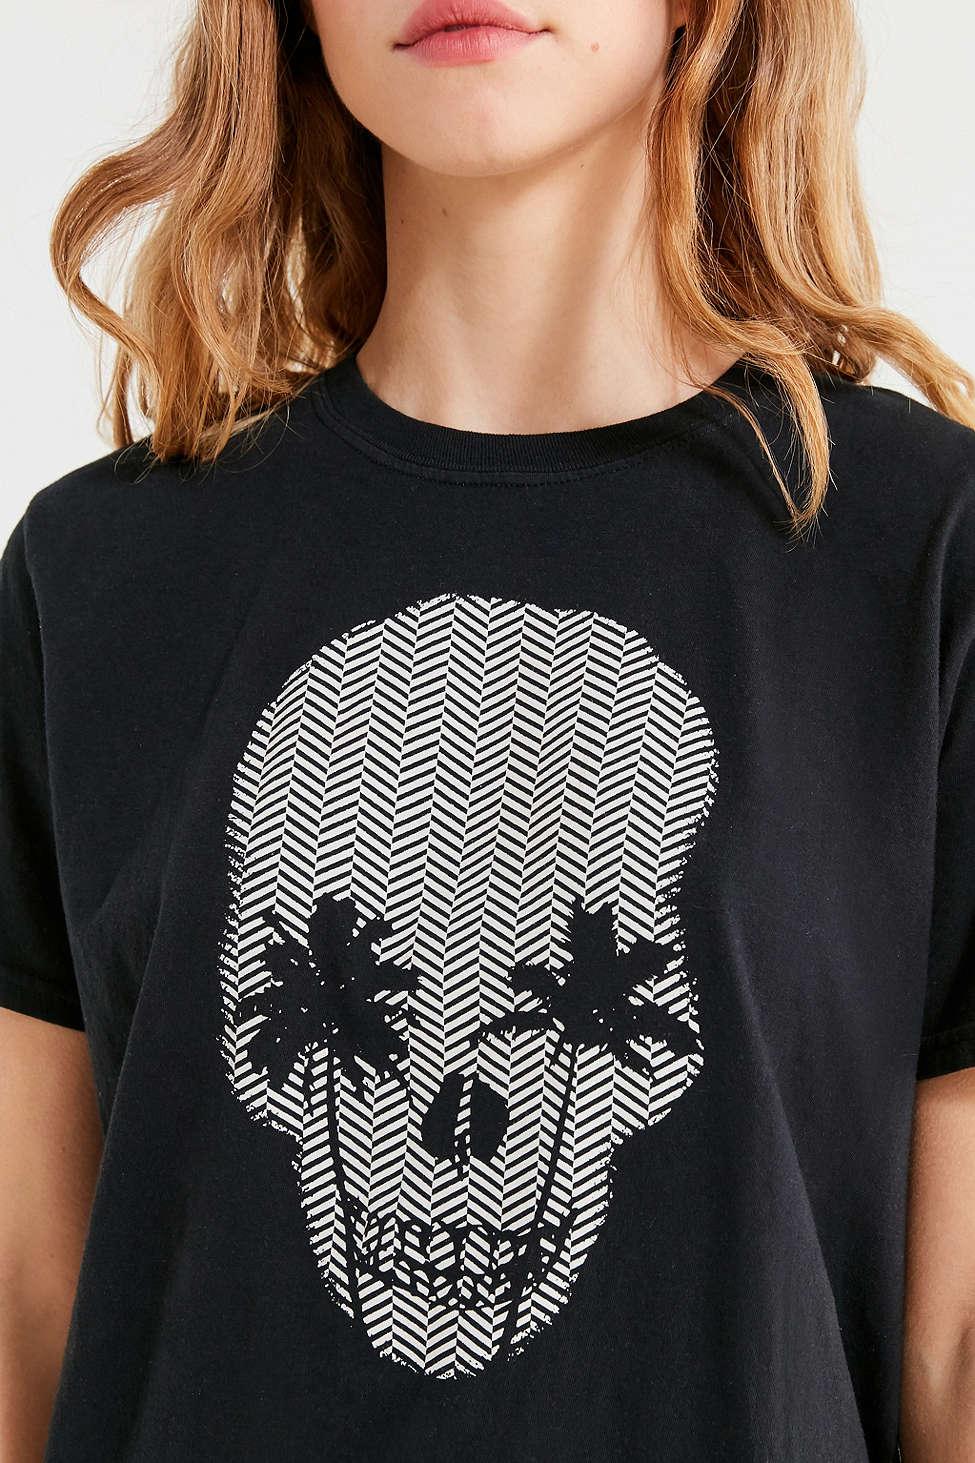 palm tree skull t-shirt